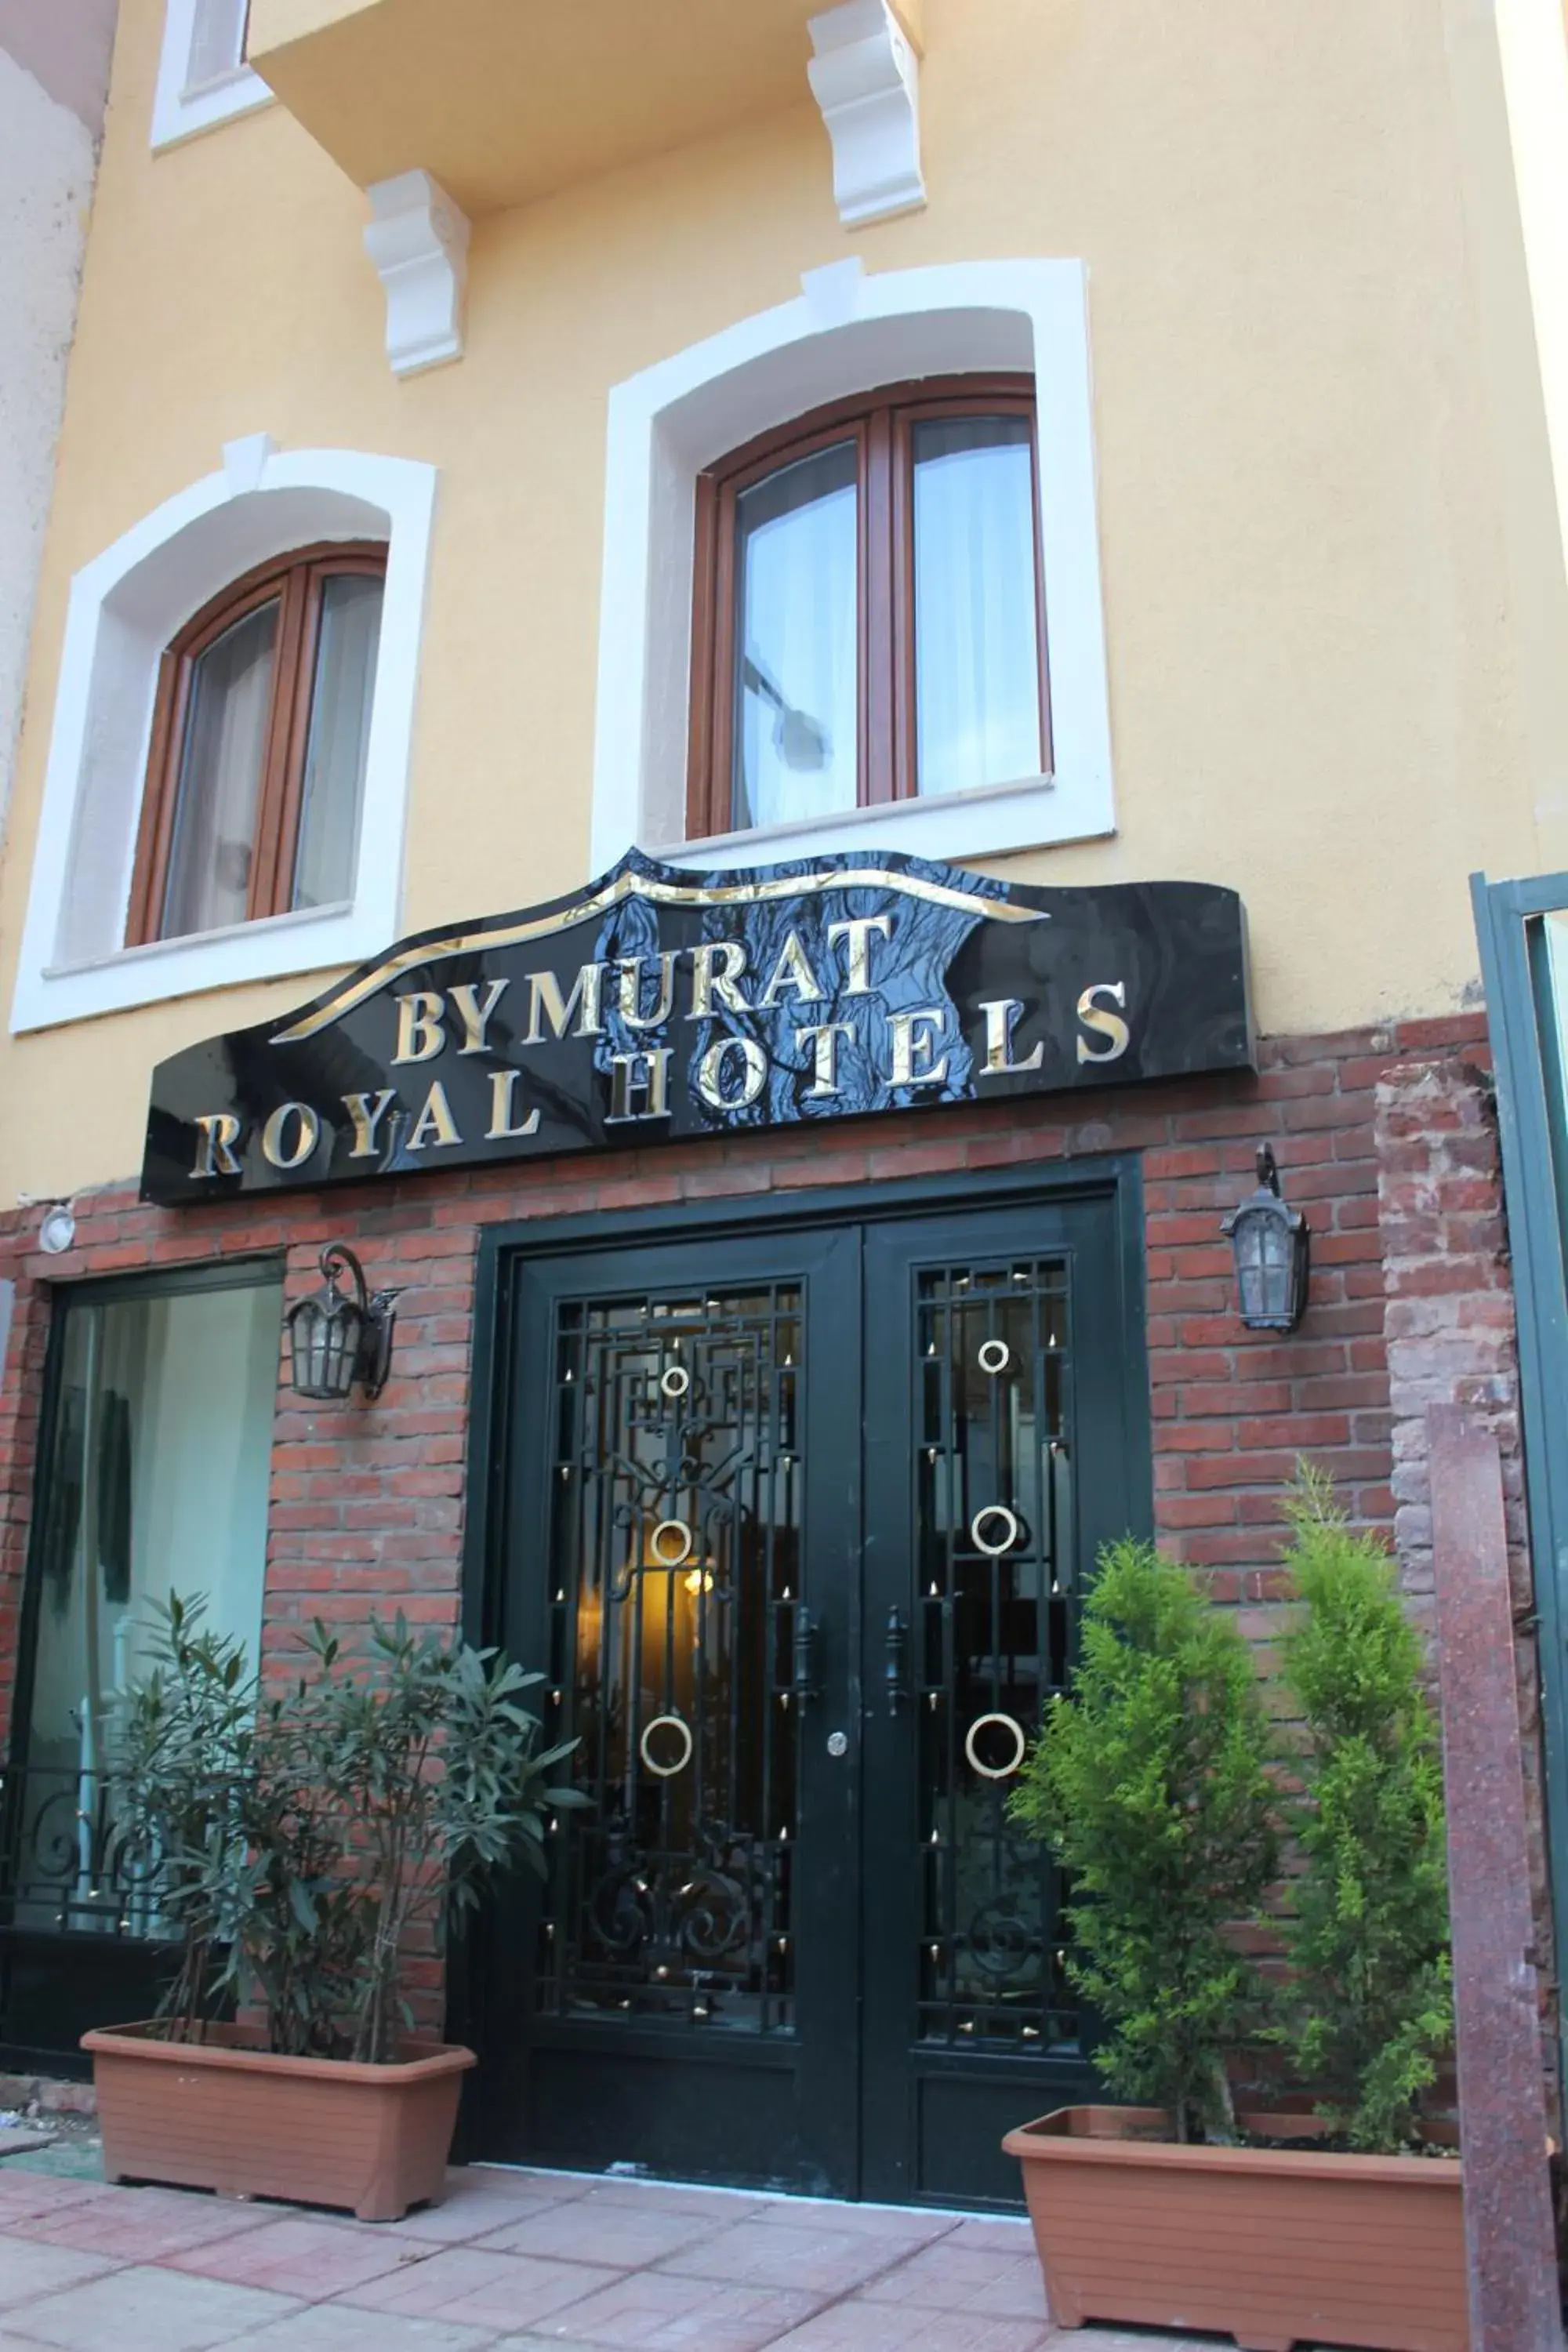 Facade/entrance in By Murat Royal Hotel Galata